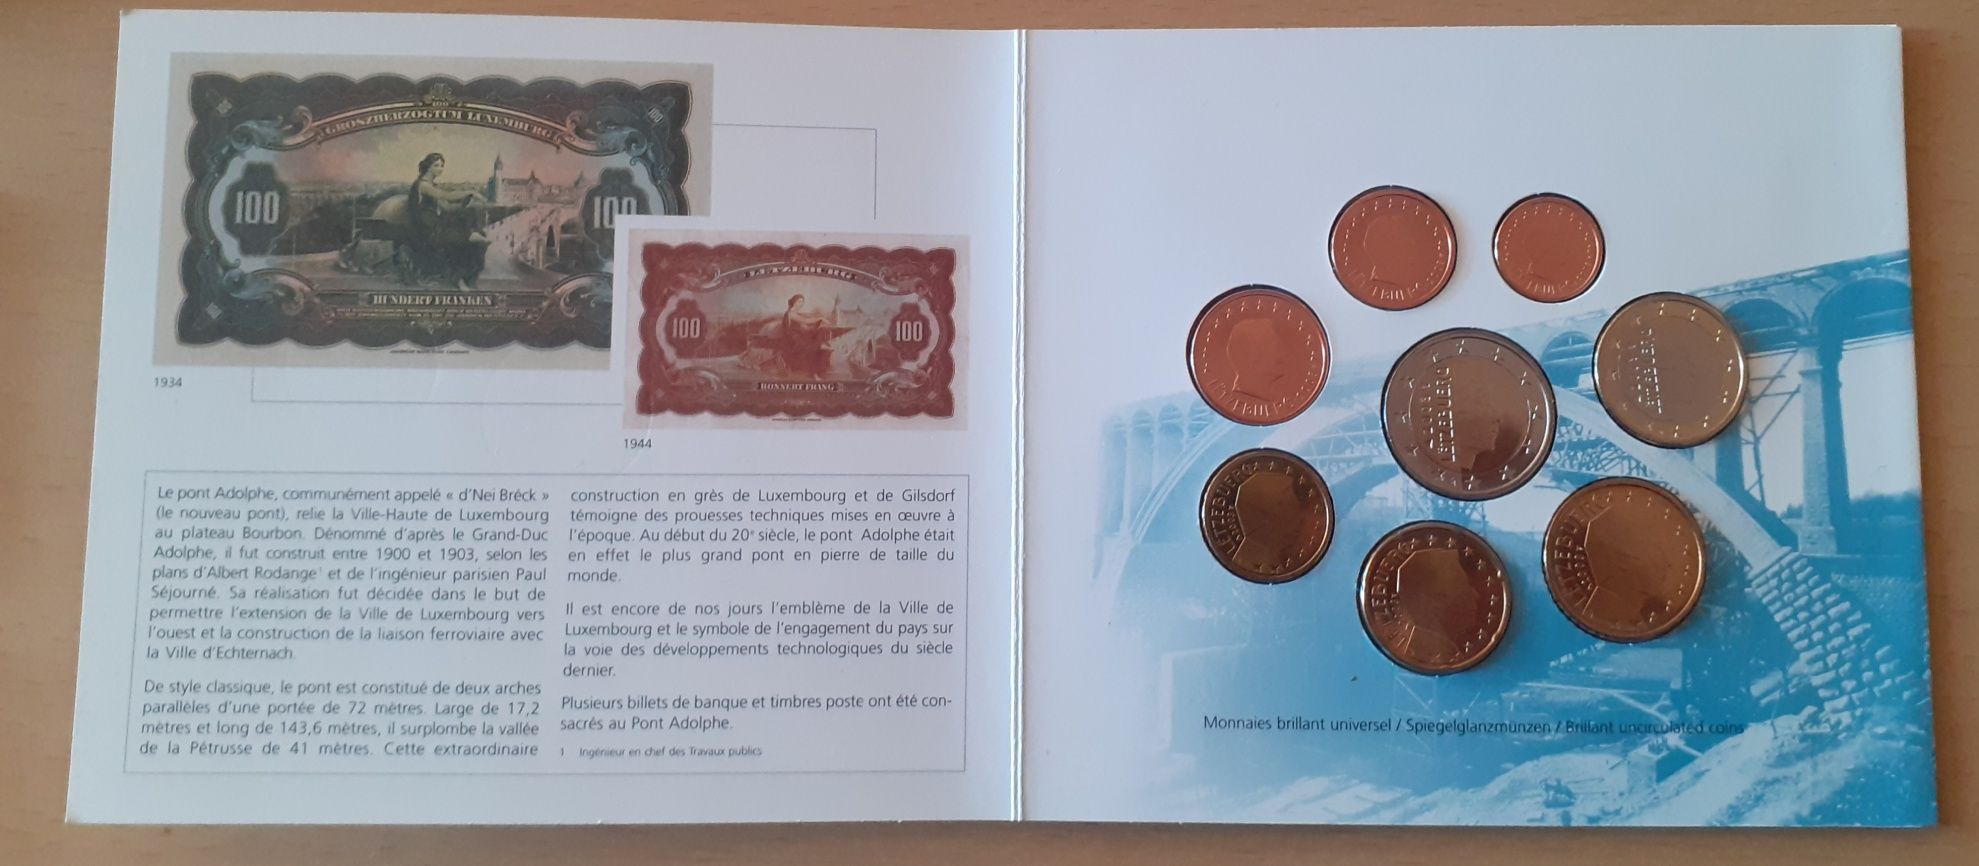 Set colecție Germania/Luxemburg 2002/2003Euro monede necirculate,2002